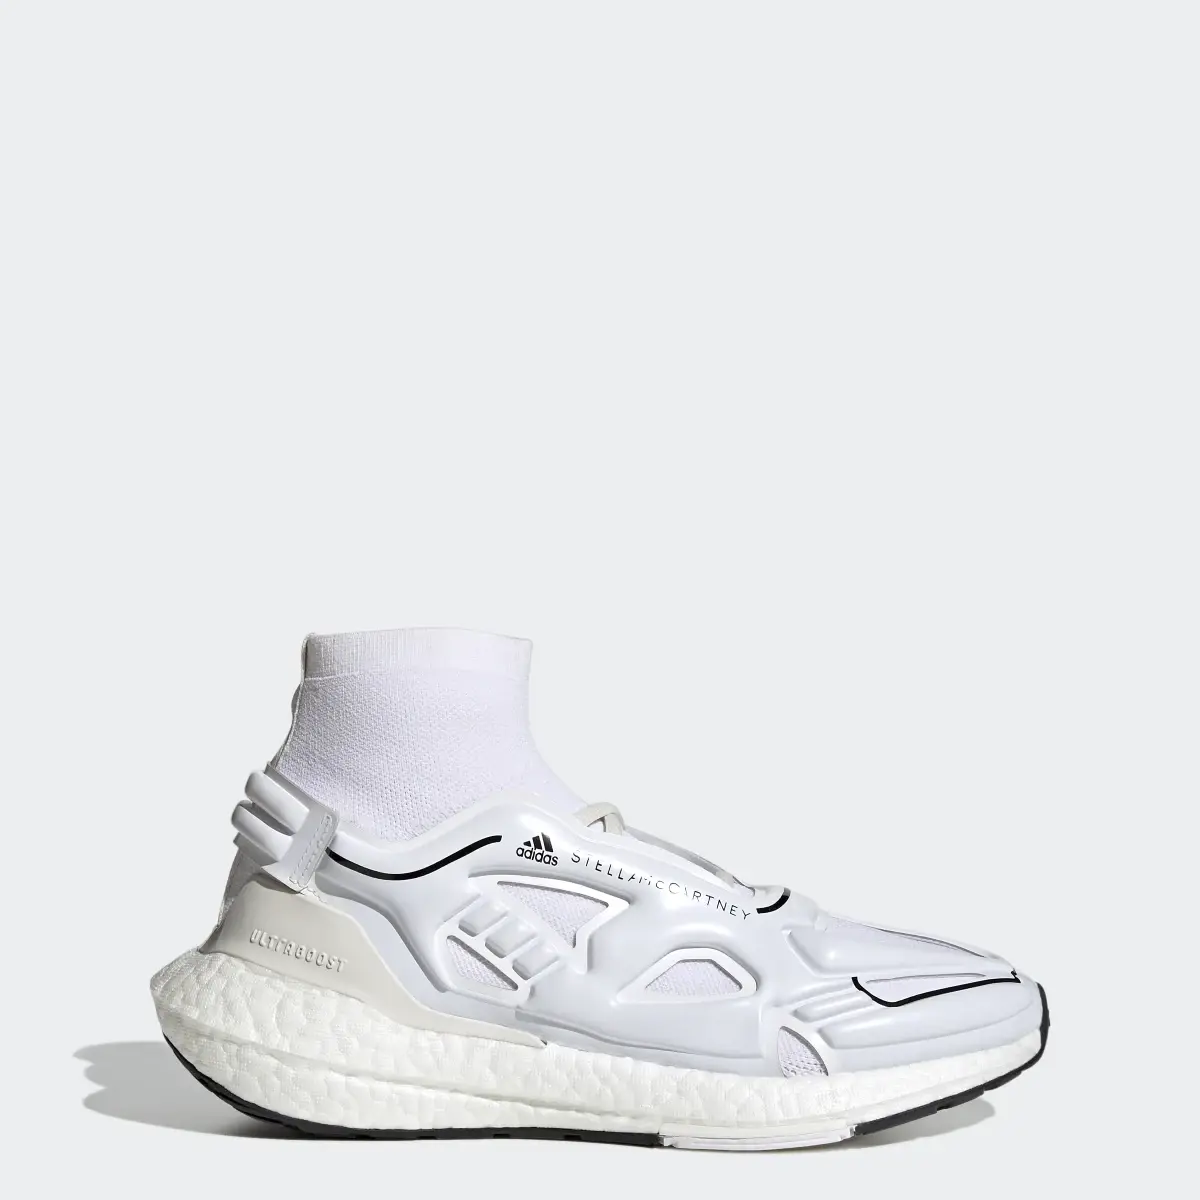 Adidas by Stella McCartney Ultraboost 22 shoes. 1